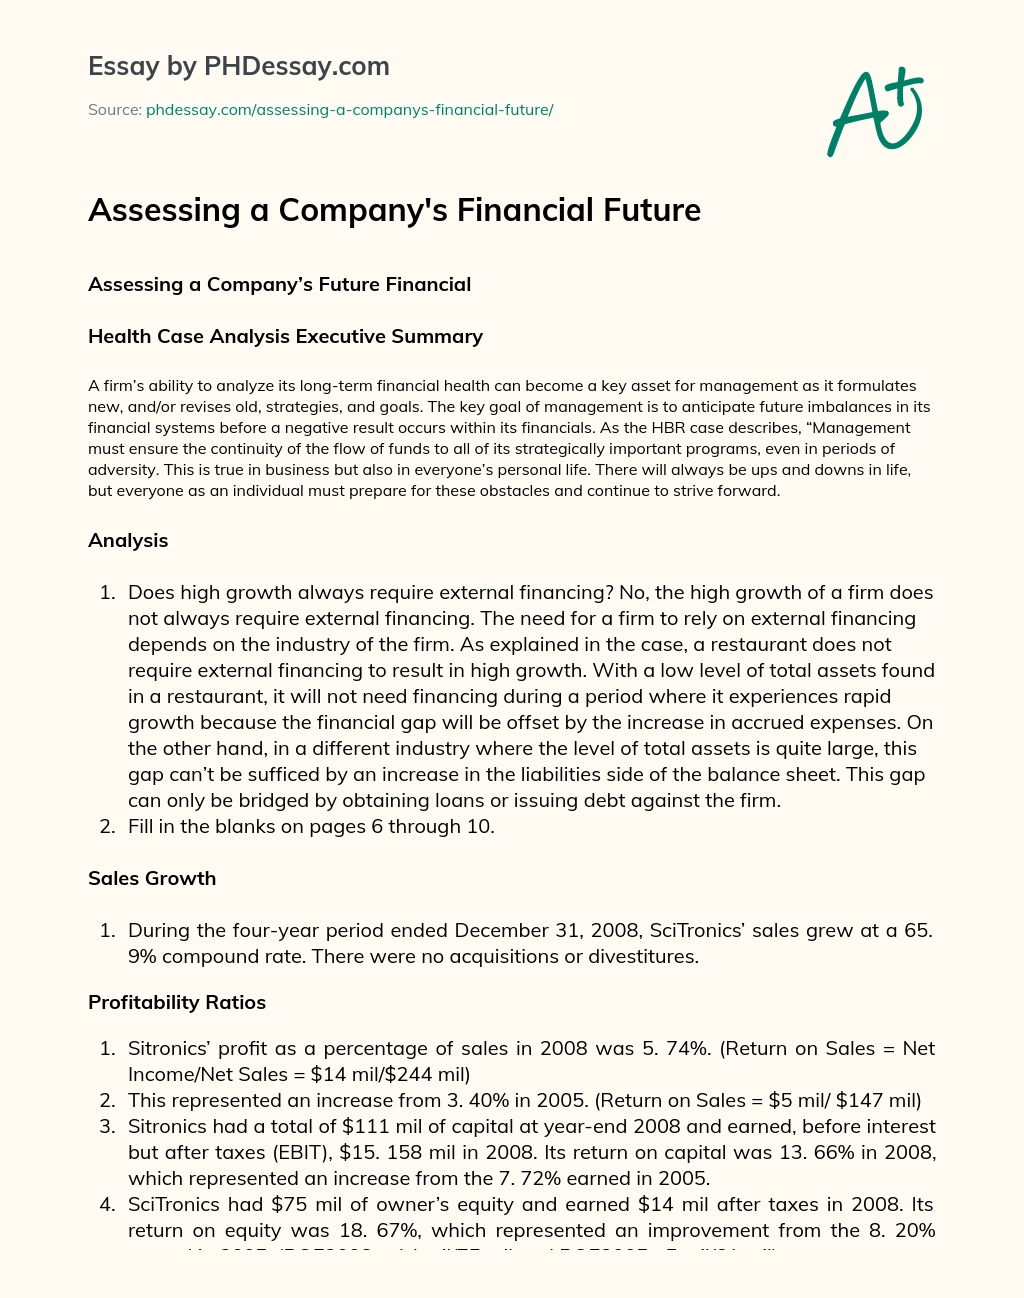 Assessing a Company’s Financial Future essay